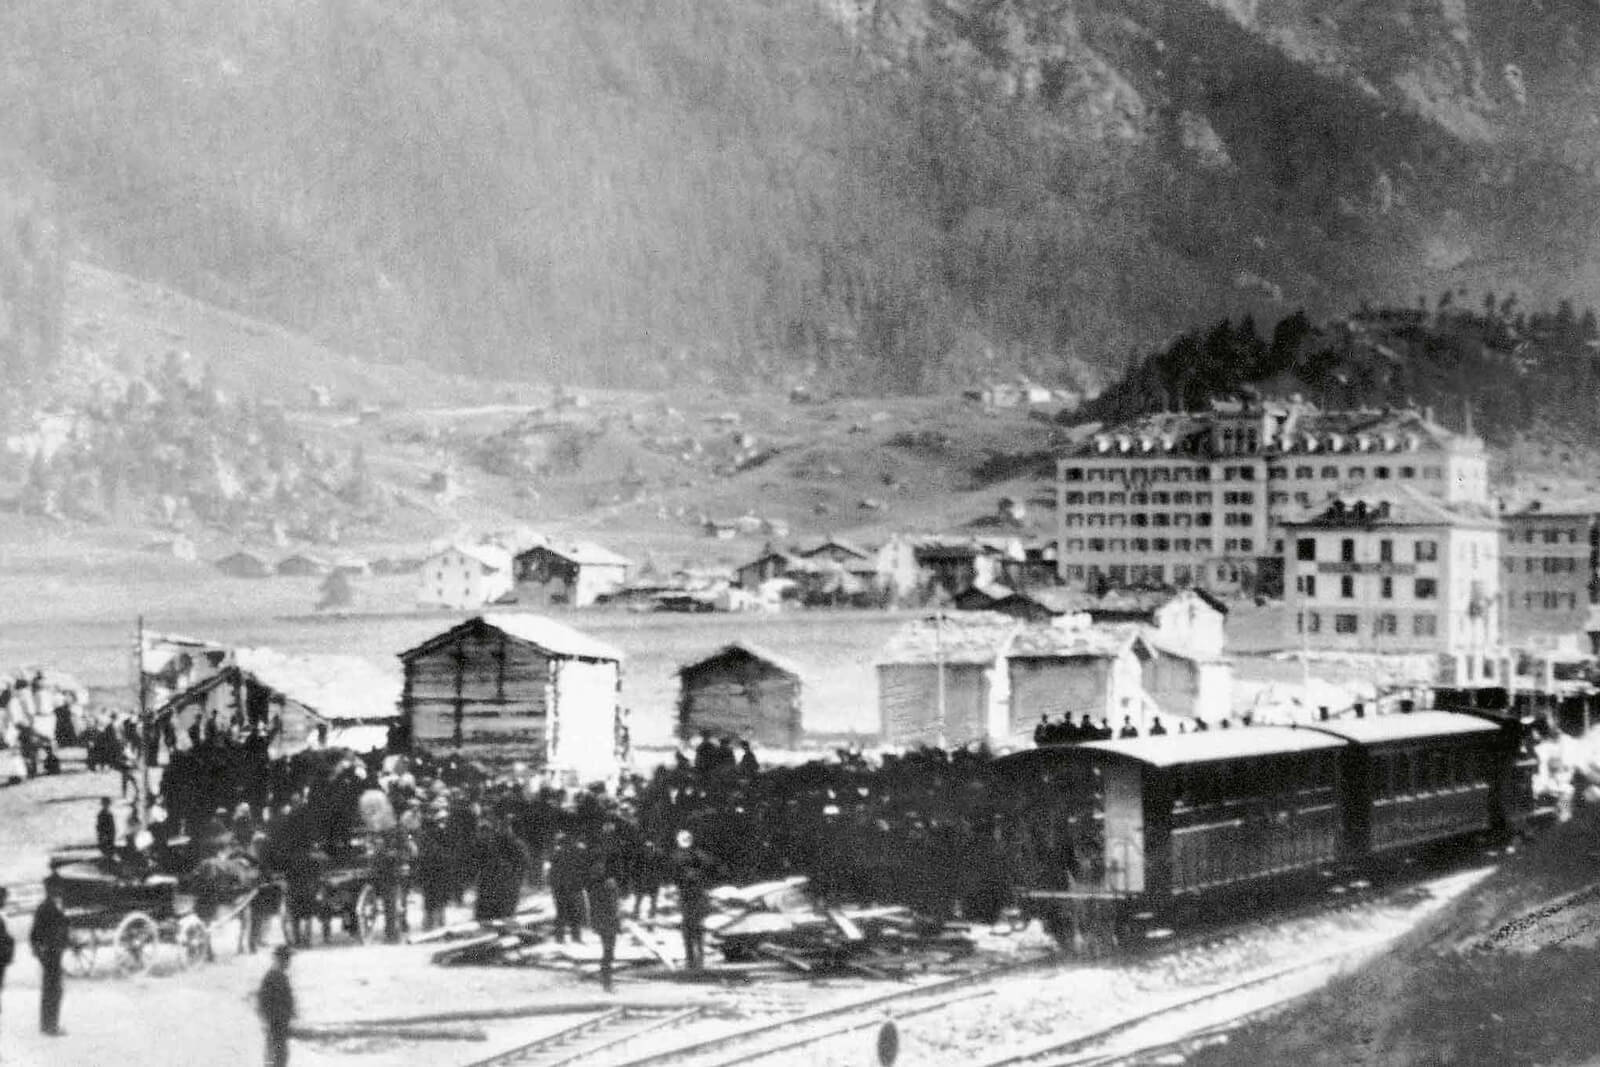 Zermatt 1891 - Arrival of First Train